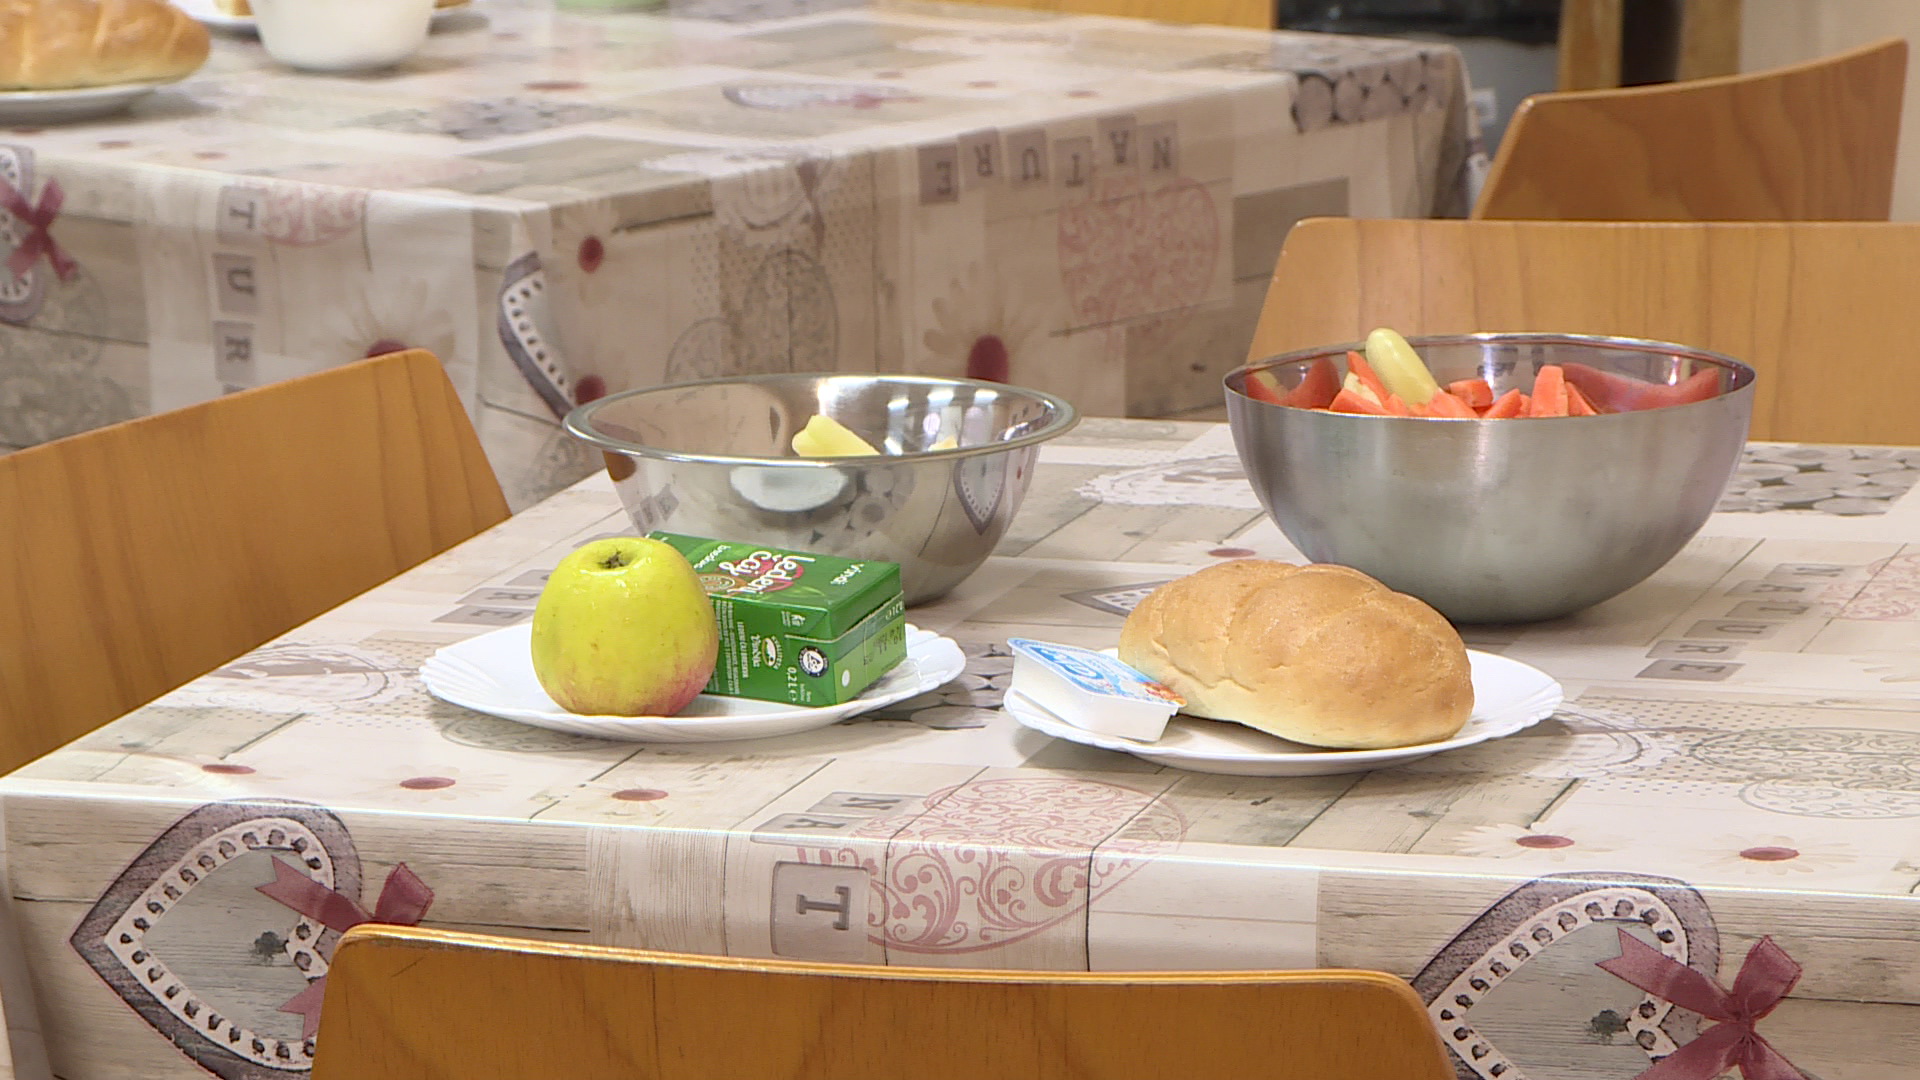 Besplatna marenda za učenike: Pecivo, sirni namaz, ledeni čaj i jabuka u OŠ Nikola Tesla